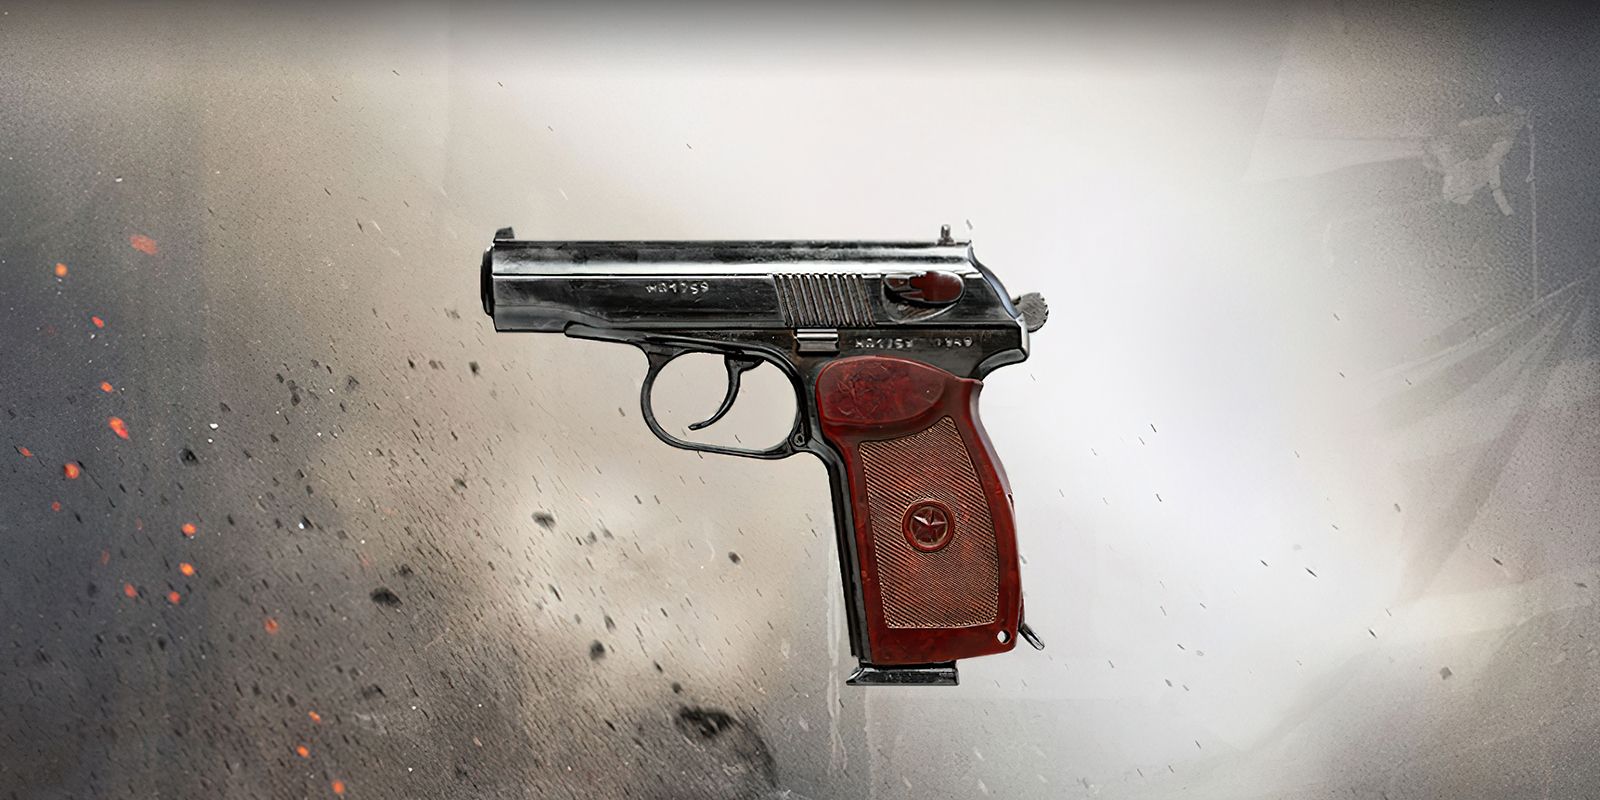 Call of Duty Warzone Sykov Pistol